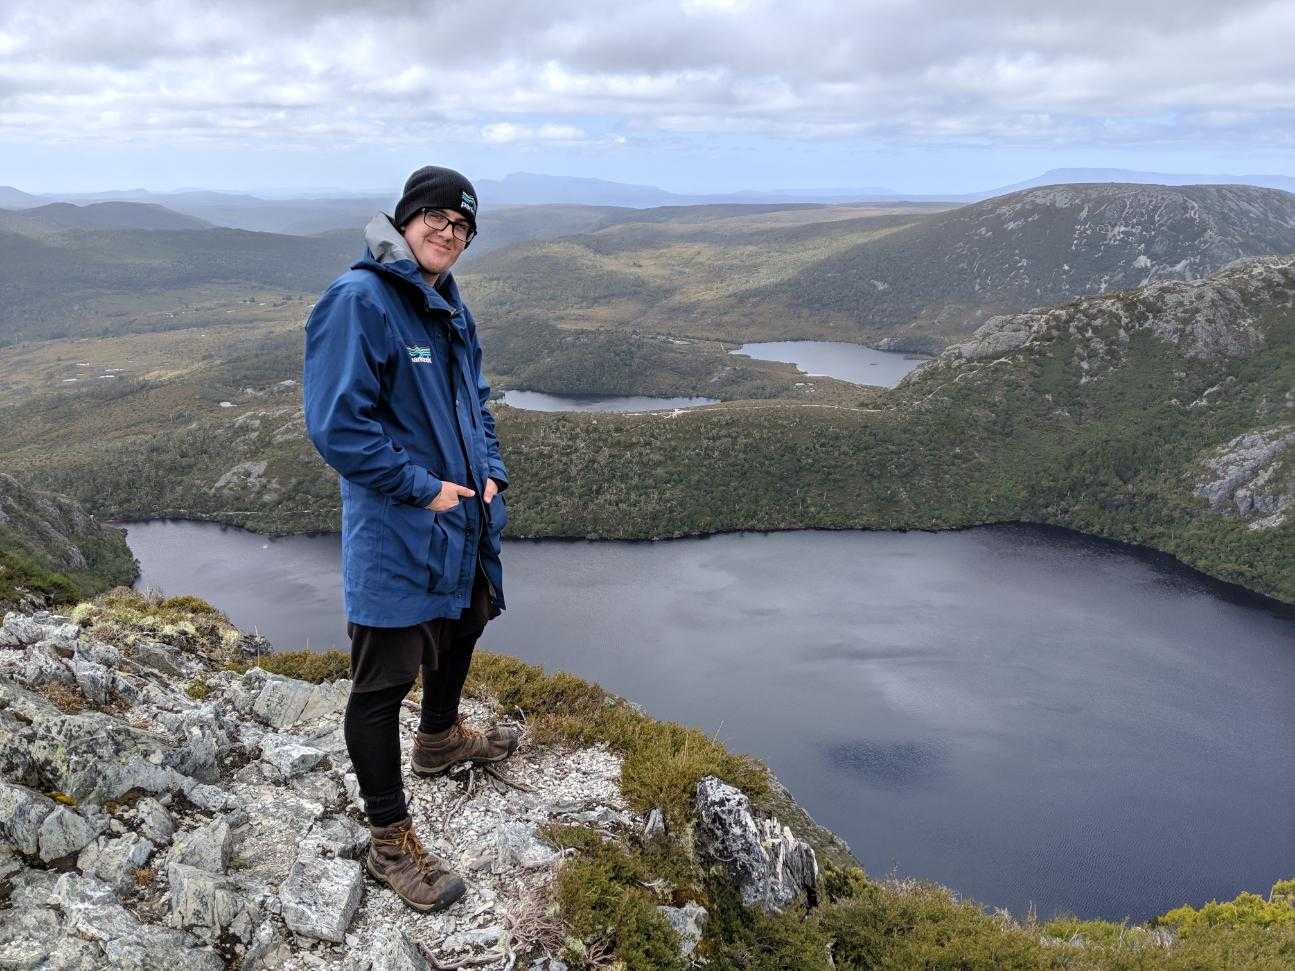 wulinantikala / Cradle Mountain – lutruwita / Tasmania – 4 Days